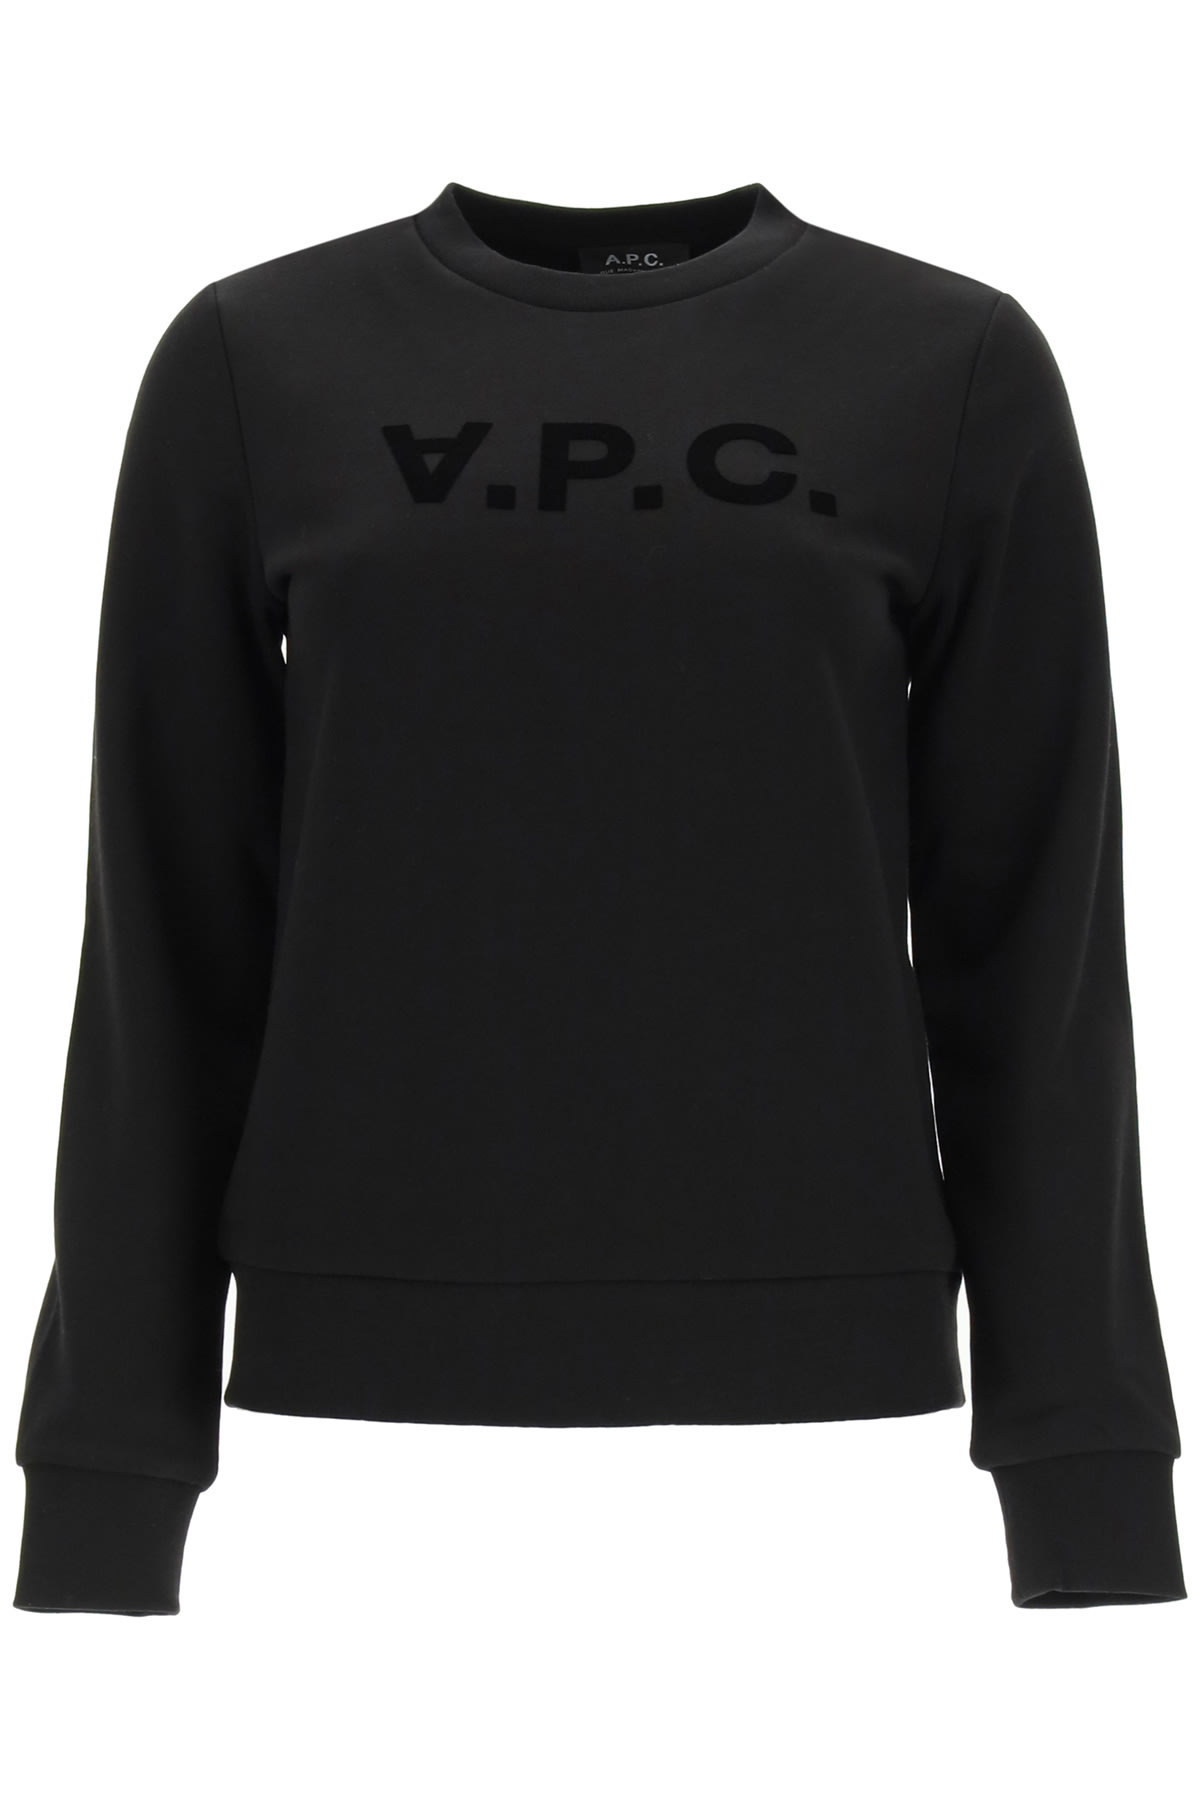 Shop Apc V.p.c. Flock Logo Sweatshirt In Black